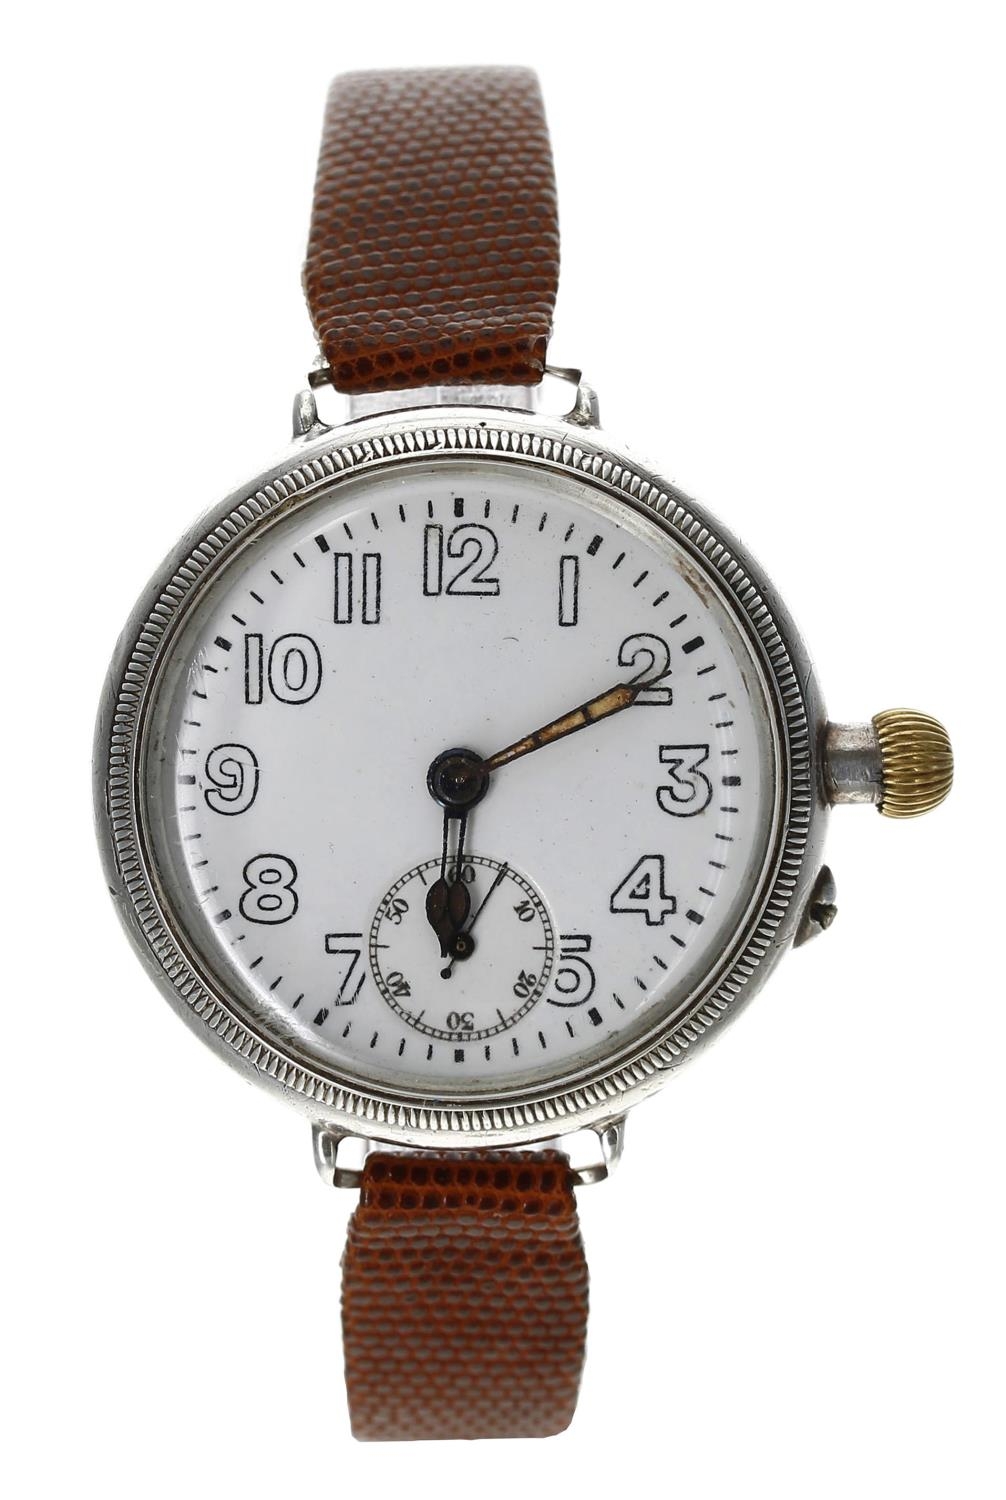 Silver WWI period 'Borgel' cased wire-lug gentleman's wristwatch, import hallmarks London 1914, case